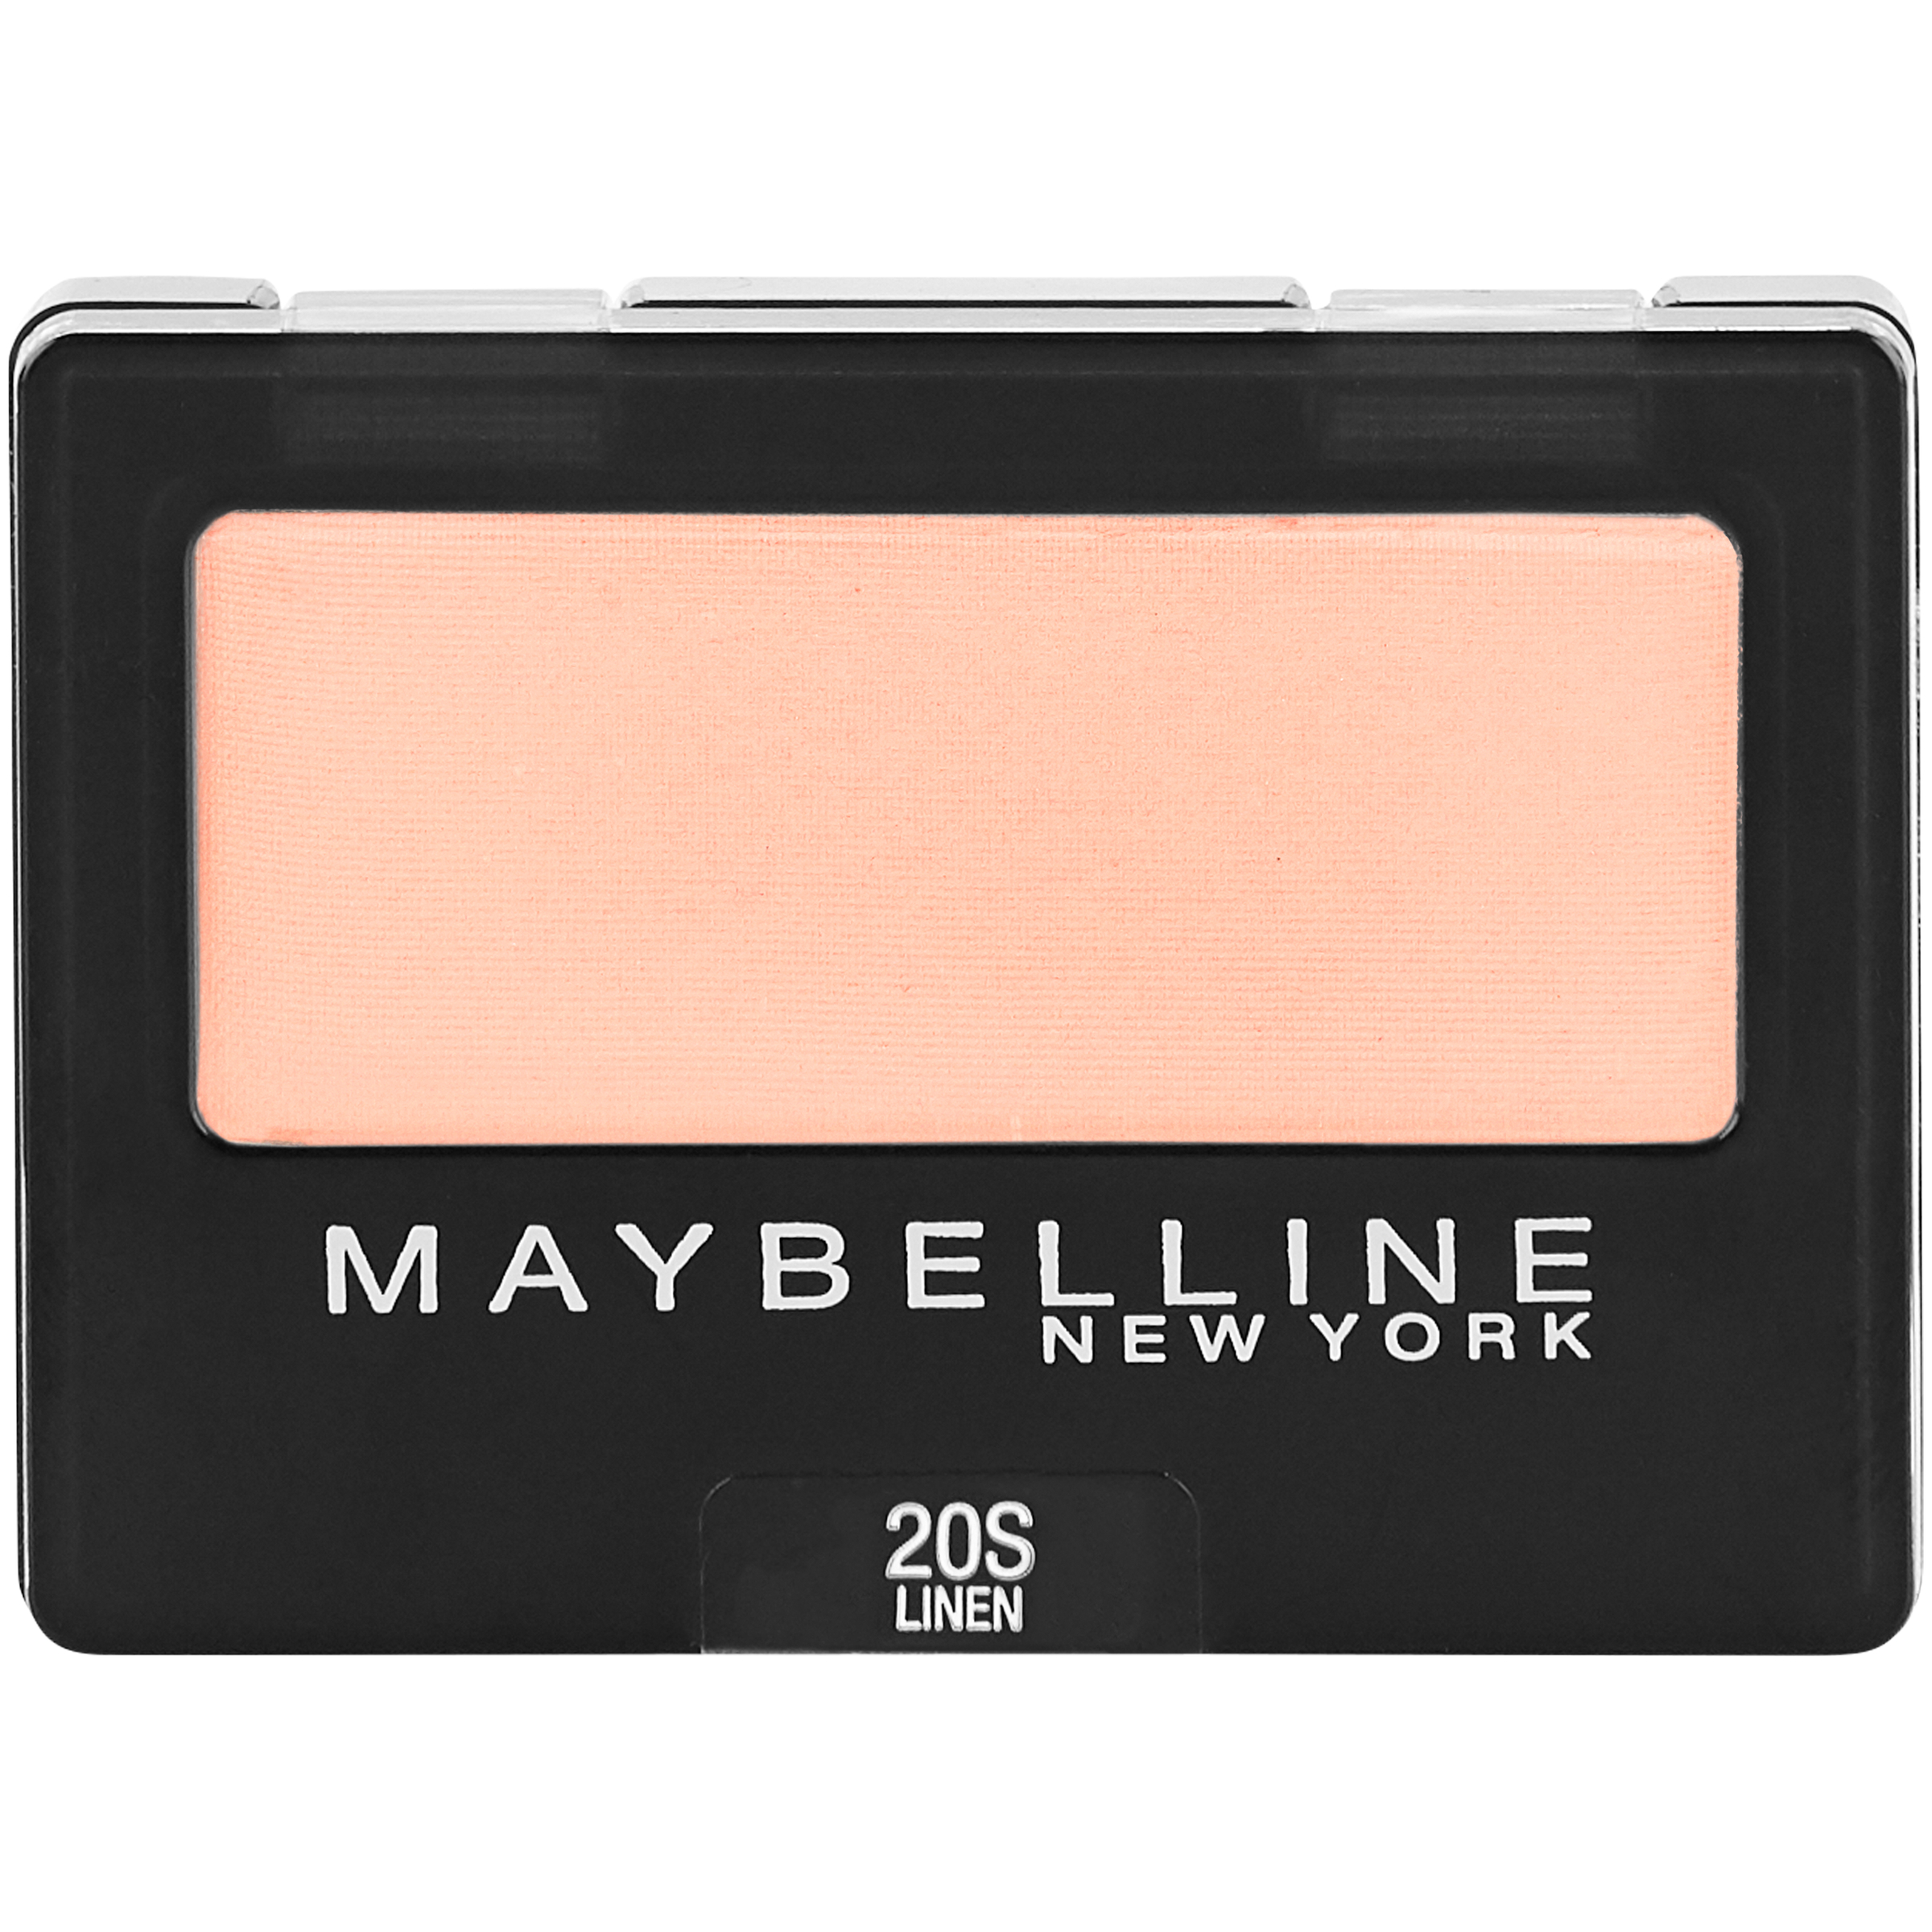 Maybelline New York  Expert Wear Eyeshadow 20S Linen, 0.08 oz. Compact